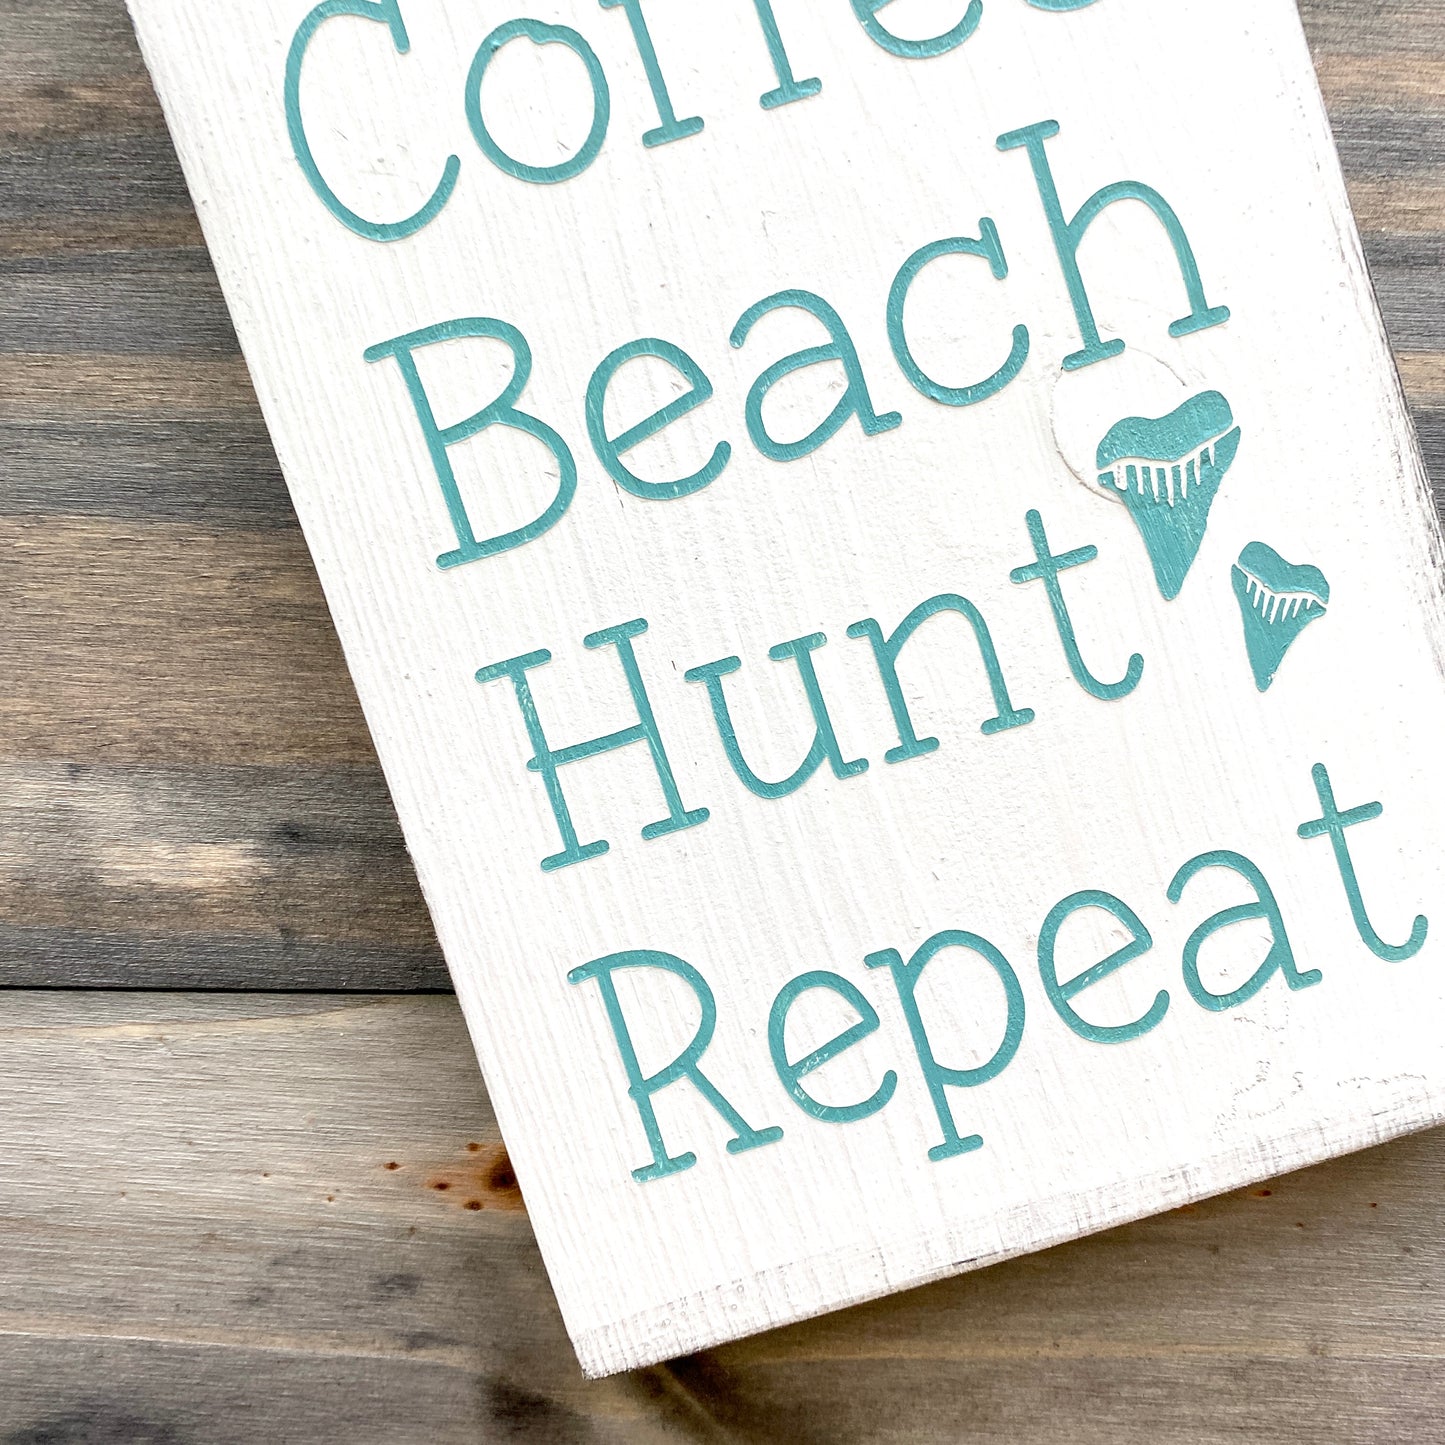 Coffee Beach Hunt Shark Teeth Repeat Sign